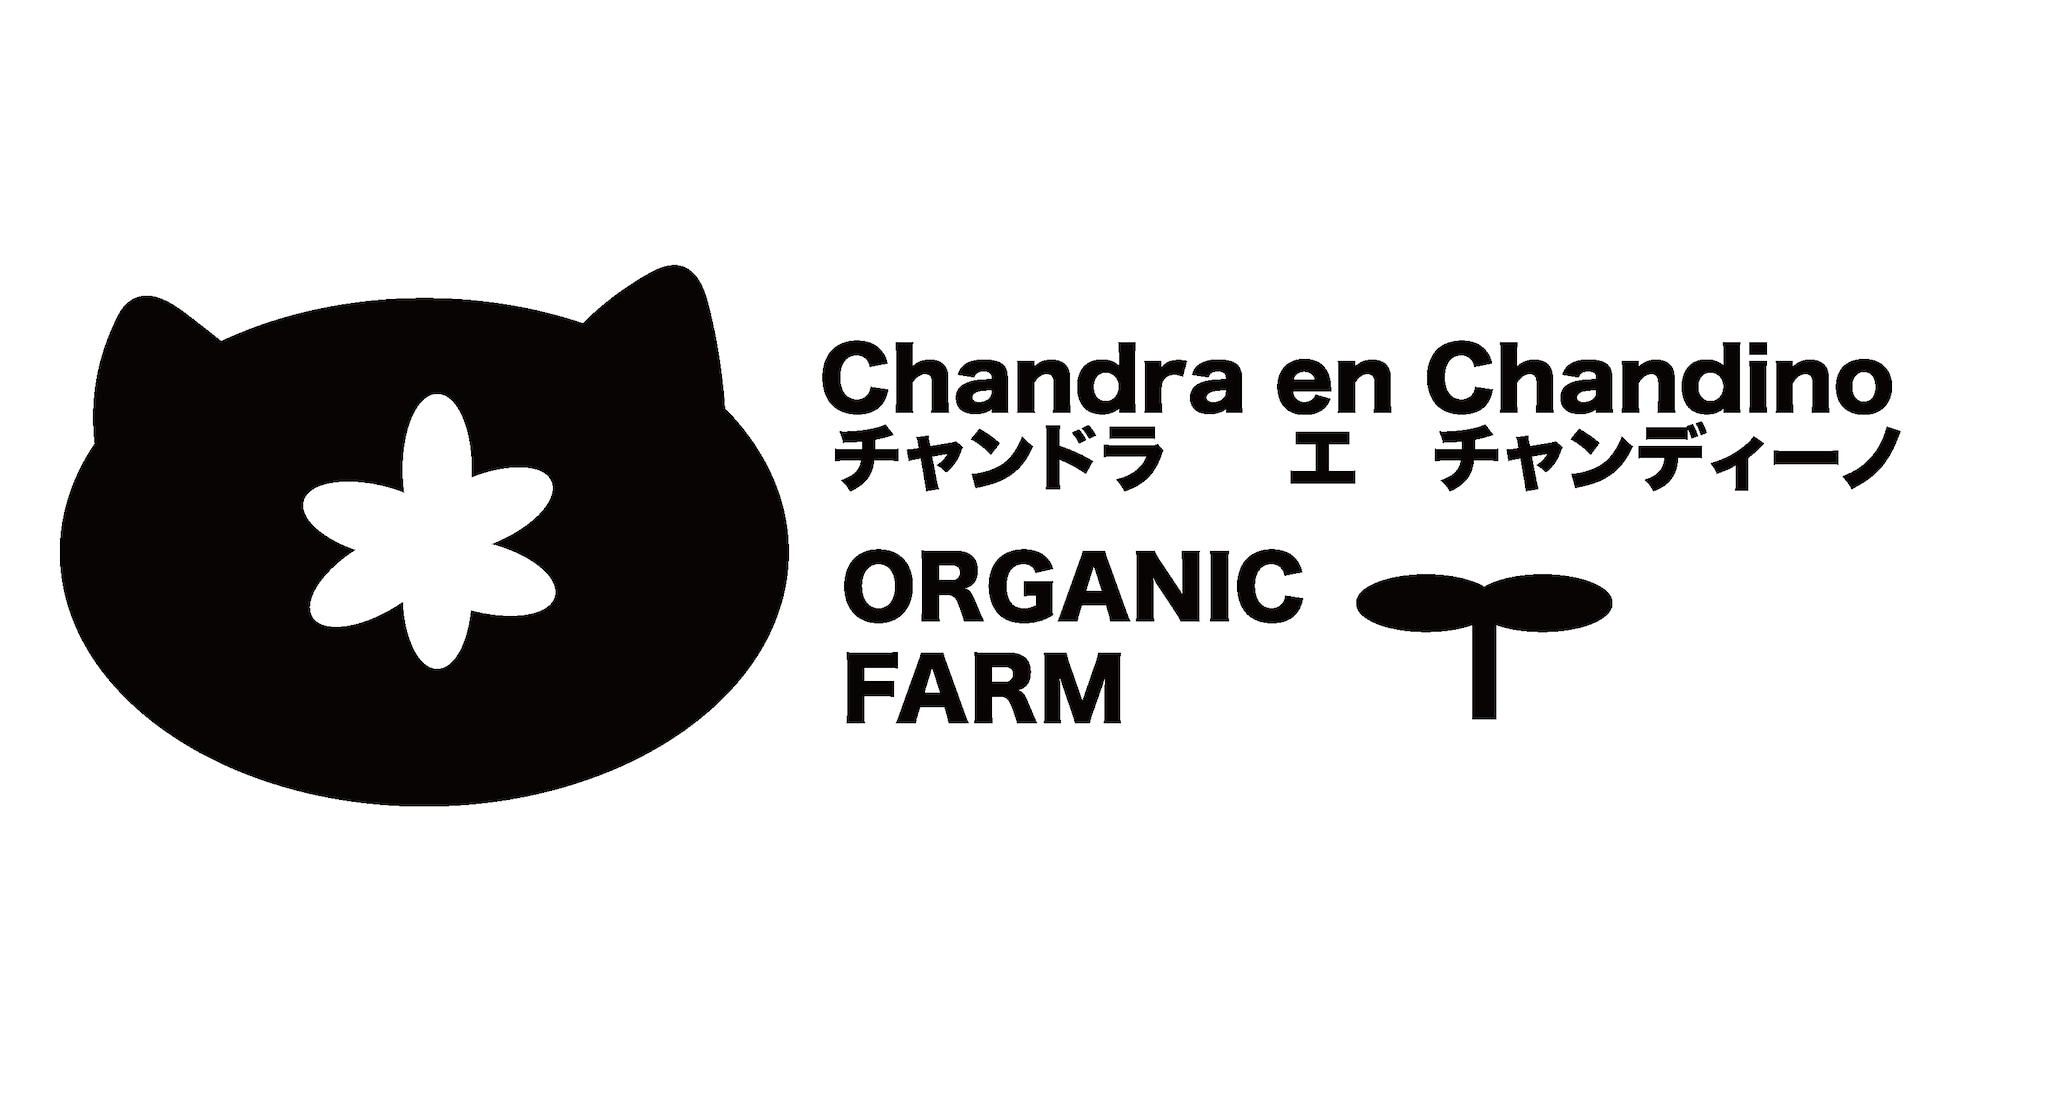 Chandra en Chandino